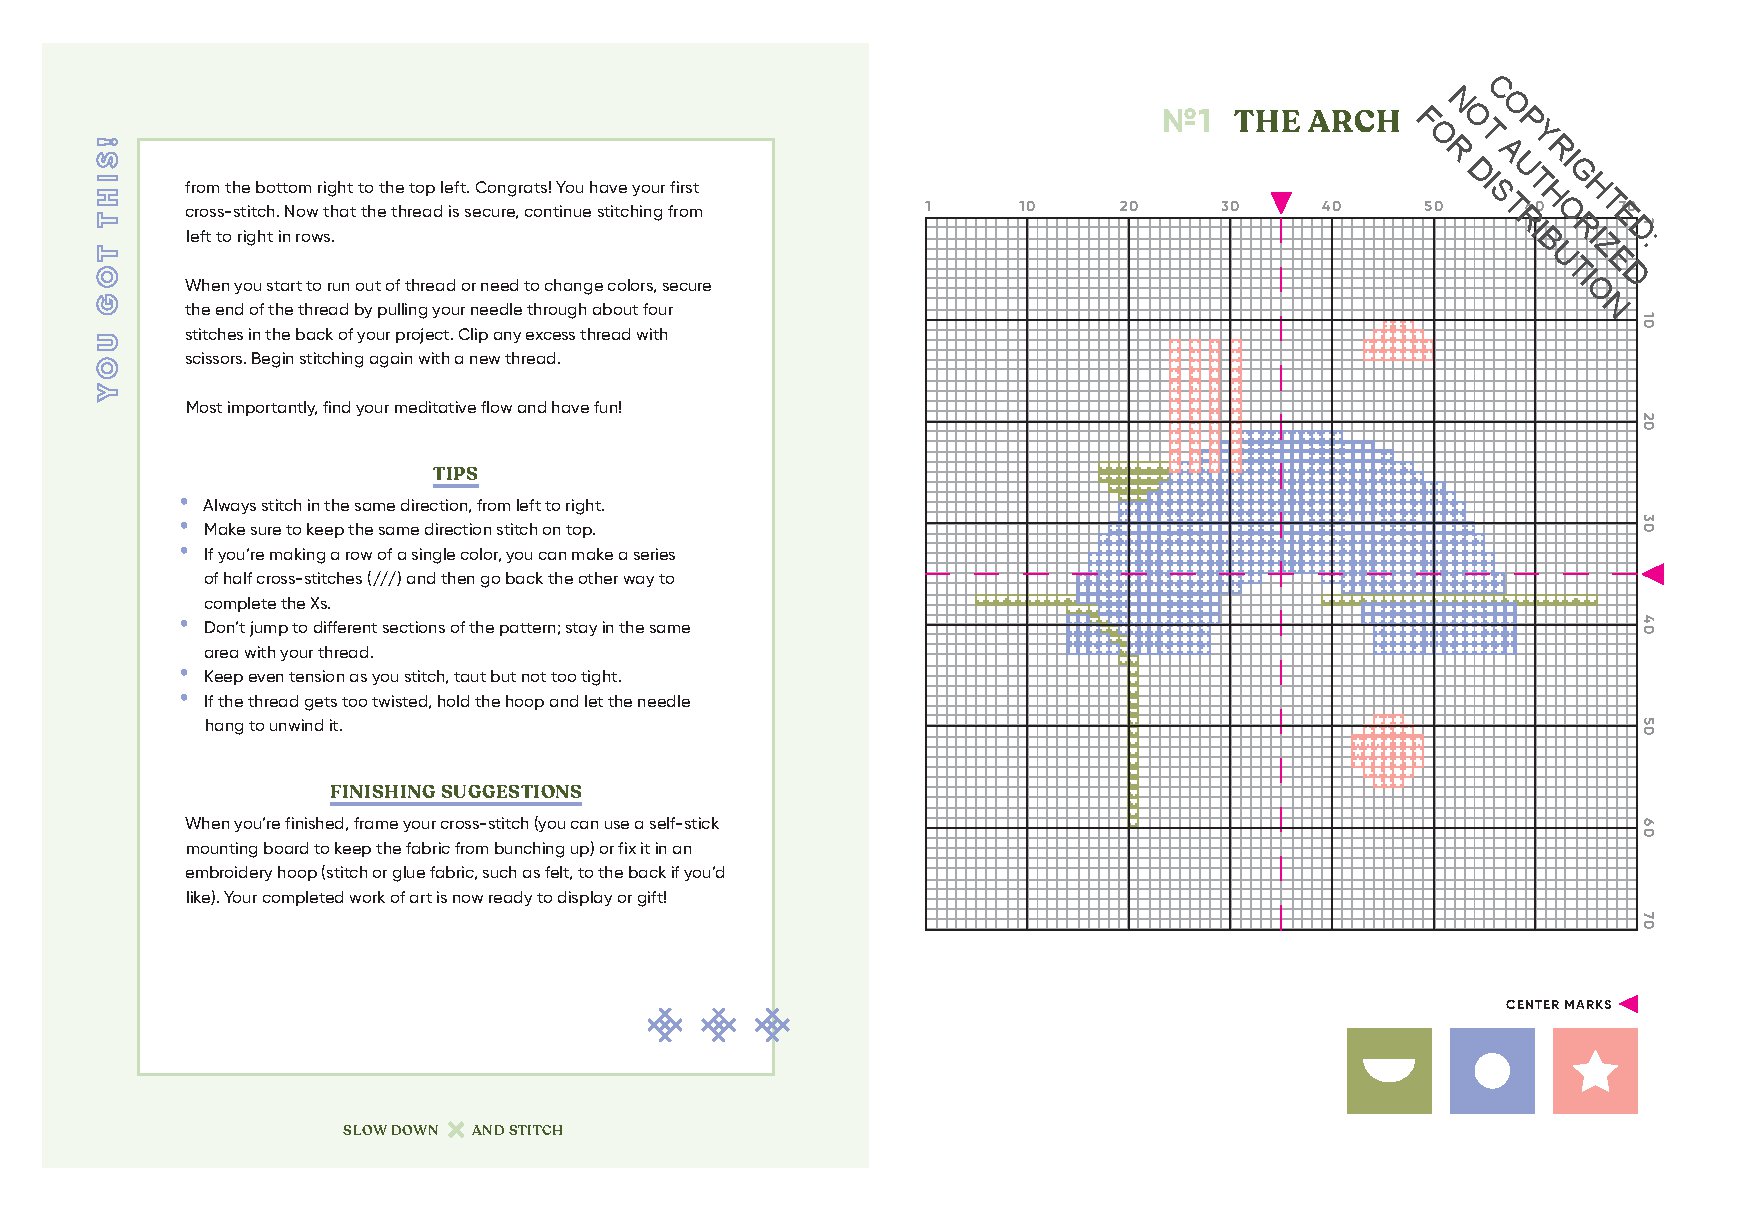 Mindful Crafts: Geometric Cross-Stitch Kit